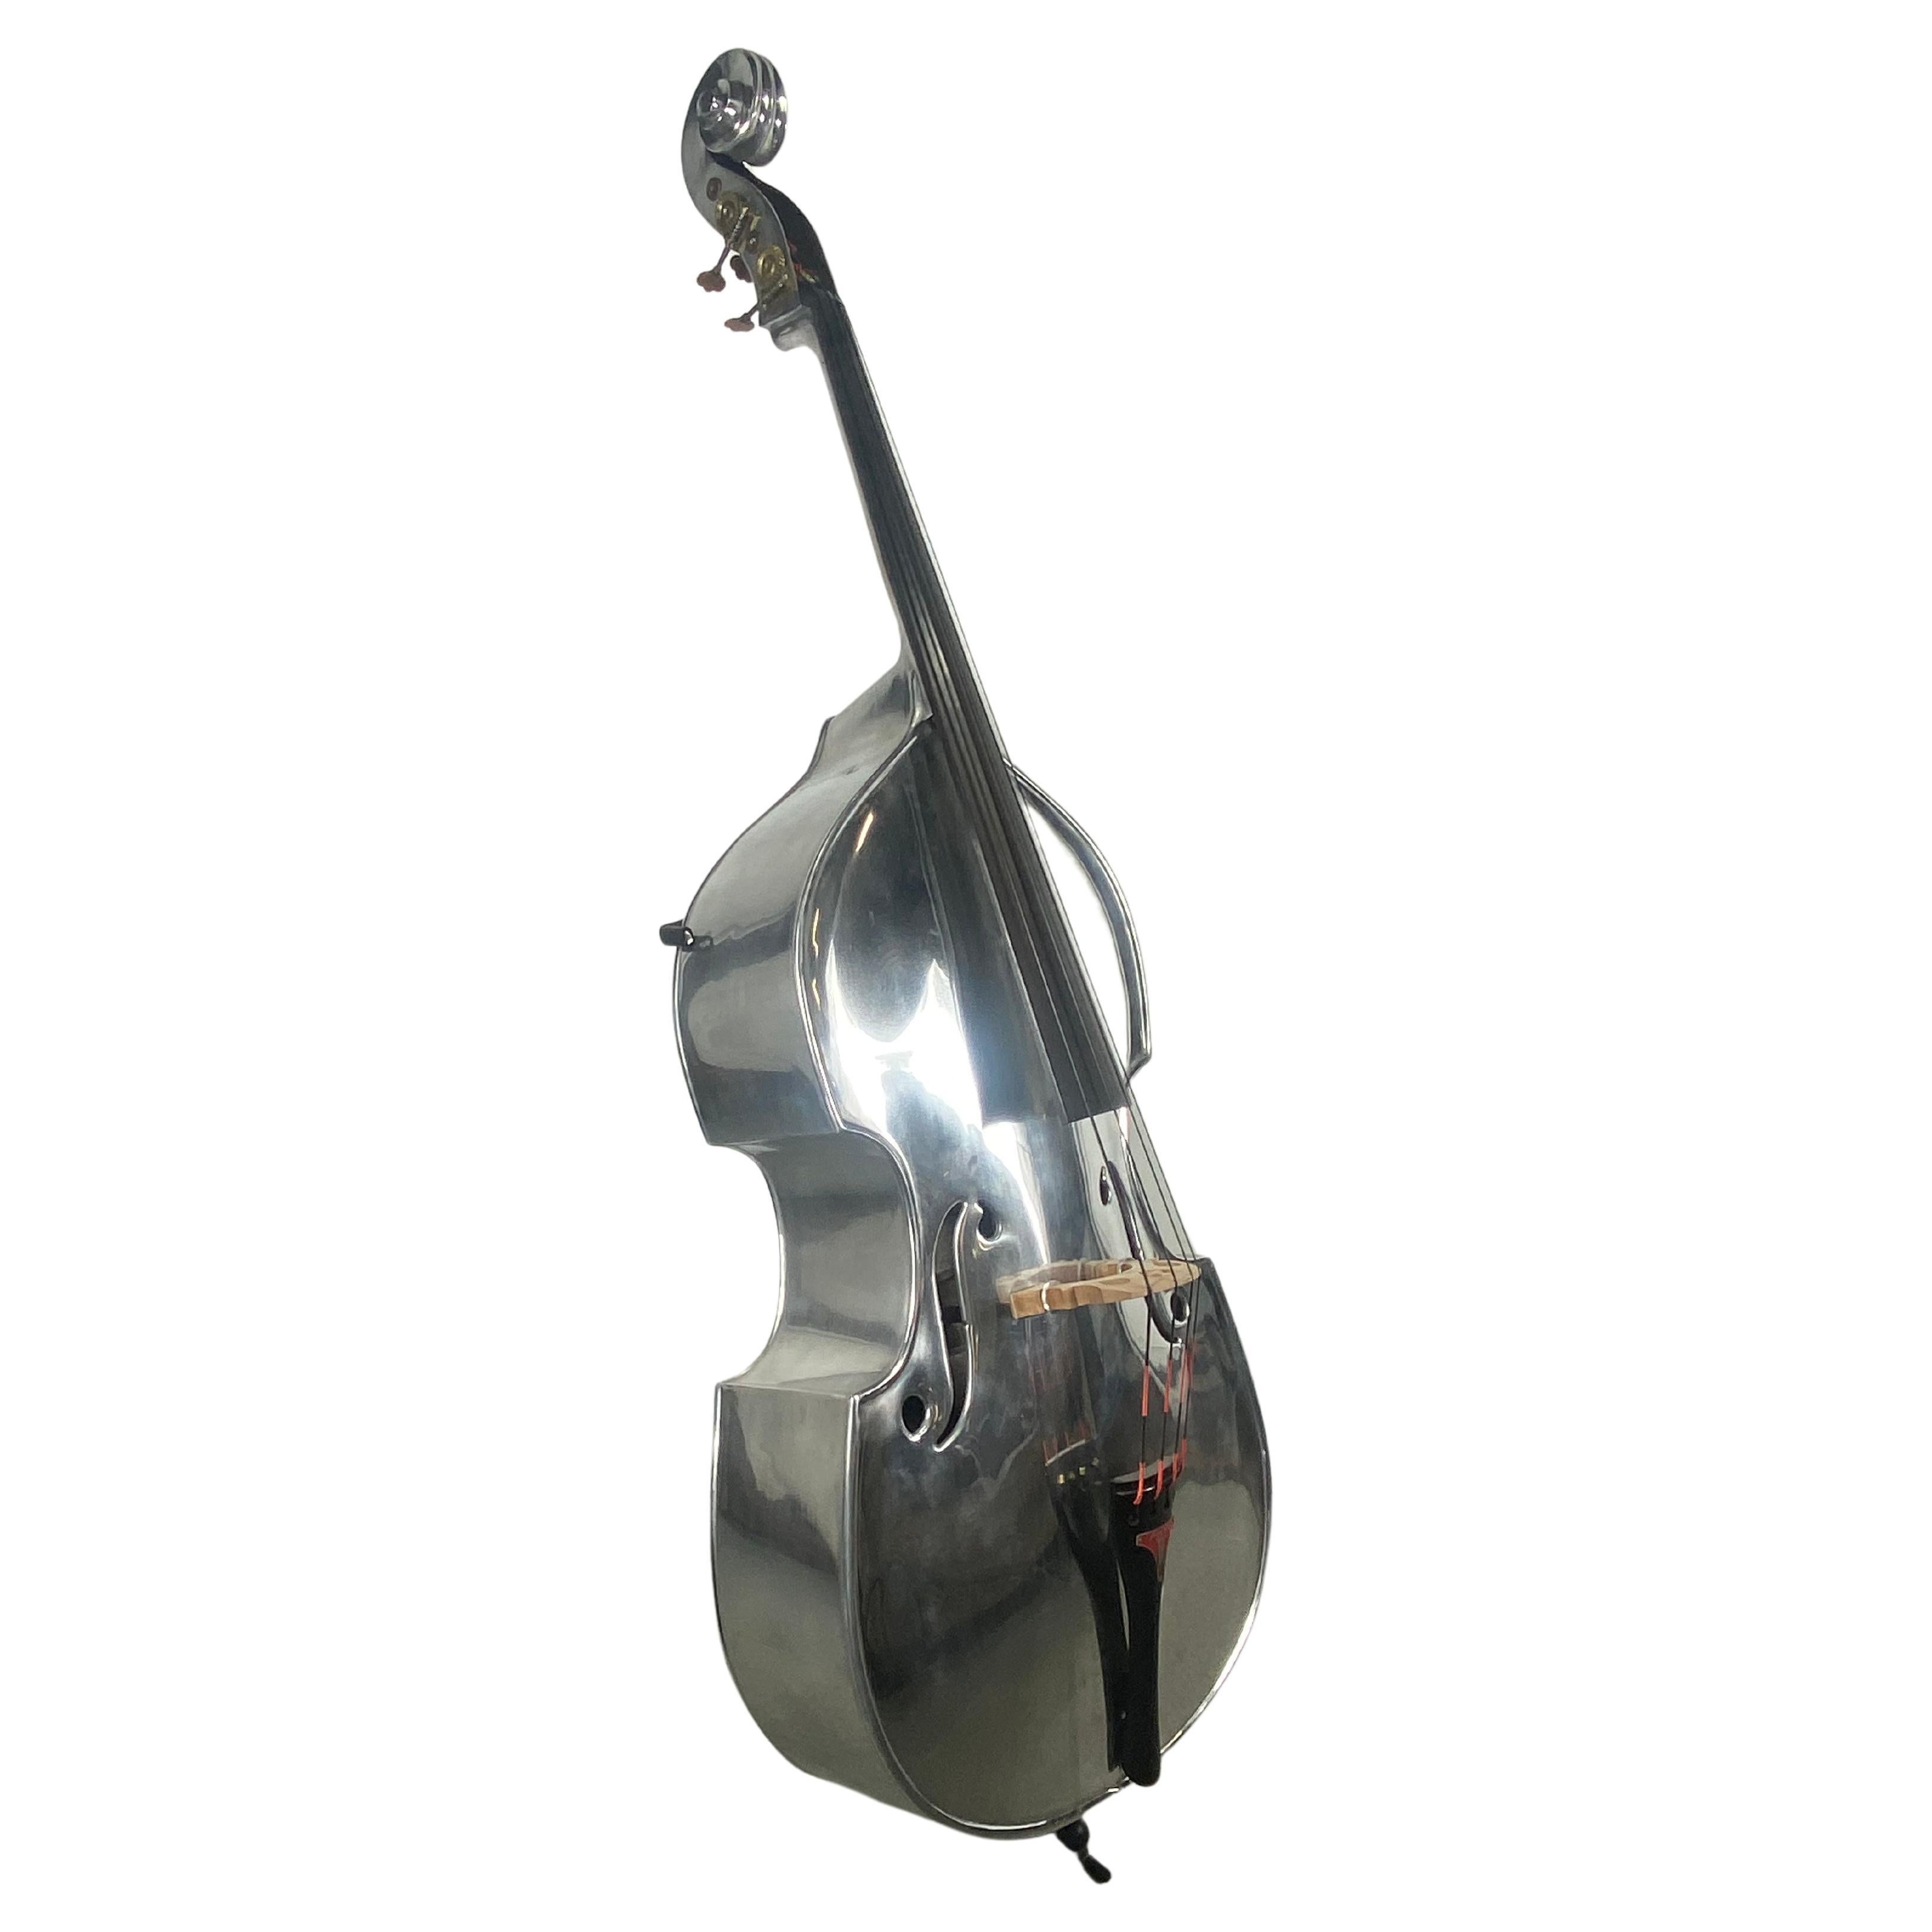 Rare 1930s Alcoa Aluminum Double Bass / Fiddle / String Bass